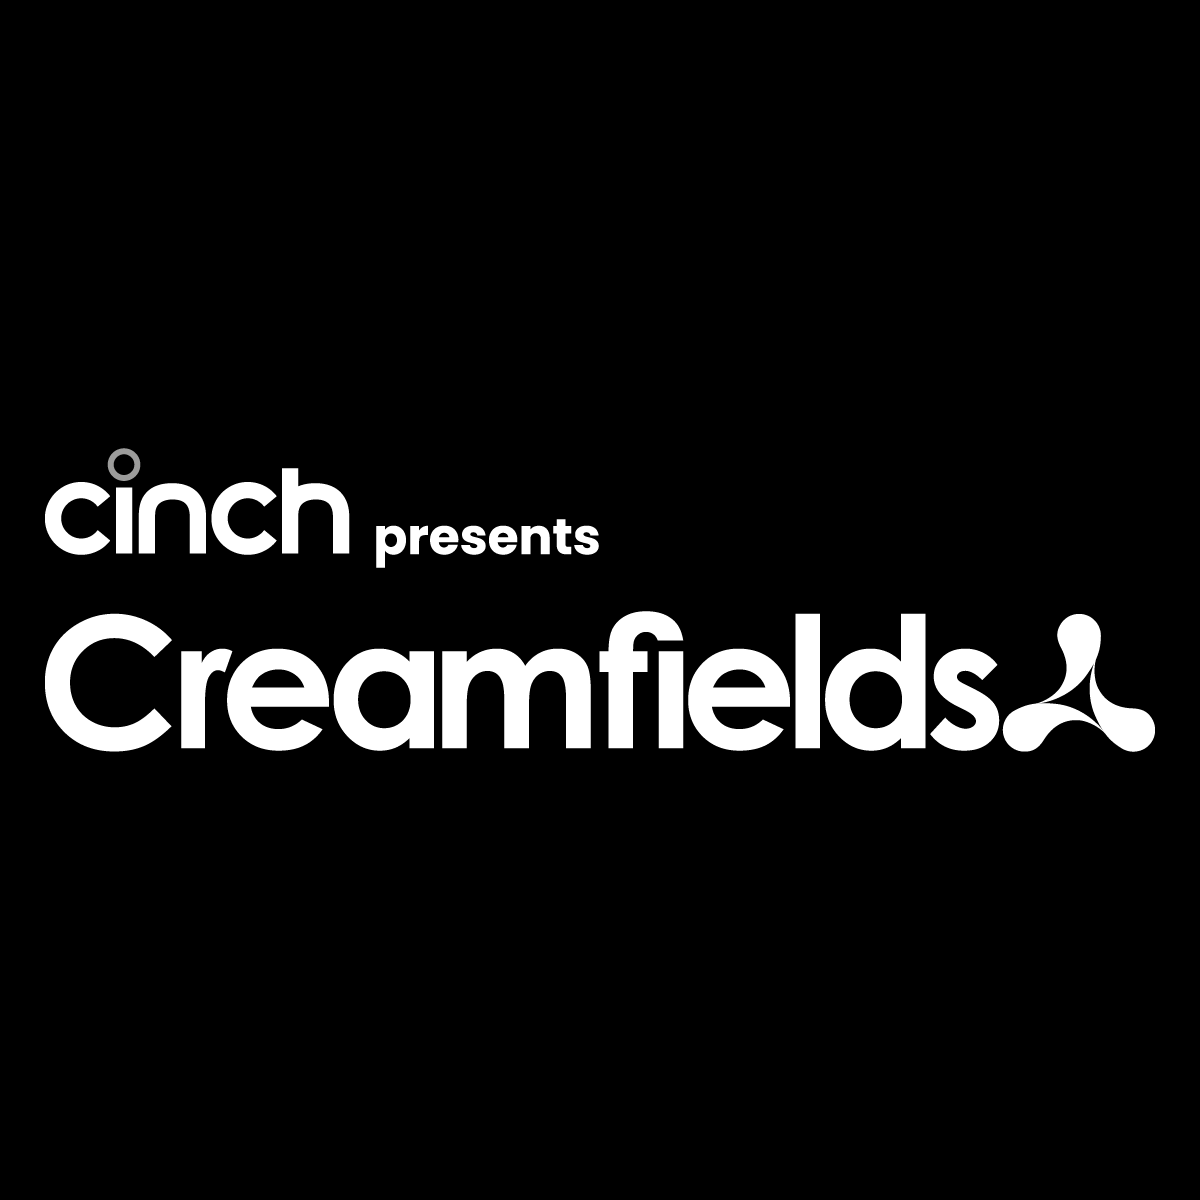 cinch presents Creamfields 2022